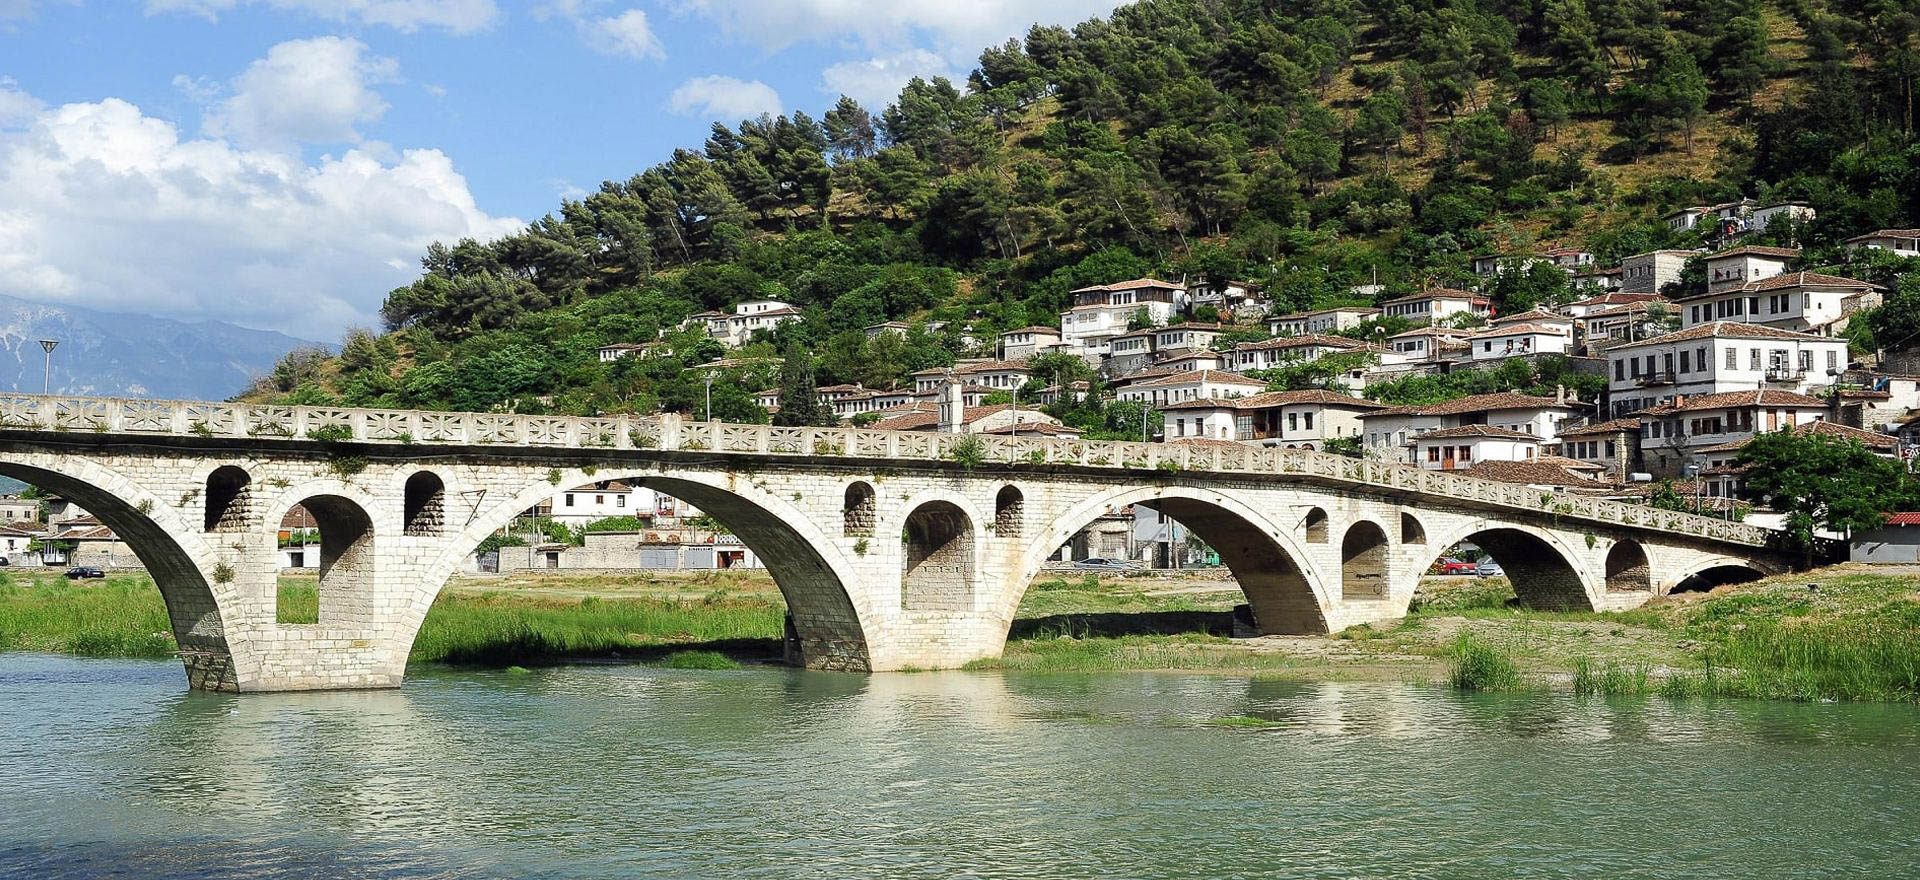 Bridge over the river to Berat - Albania holidays